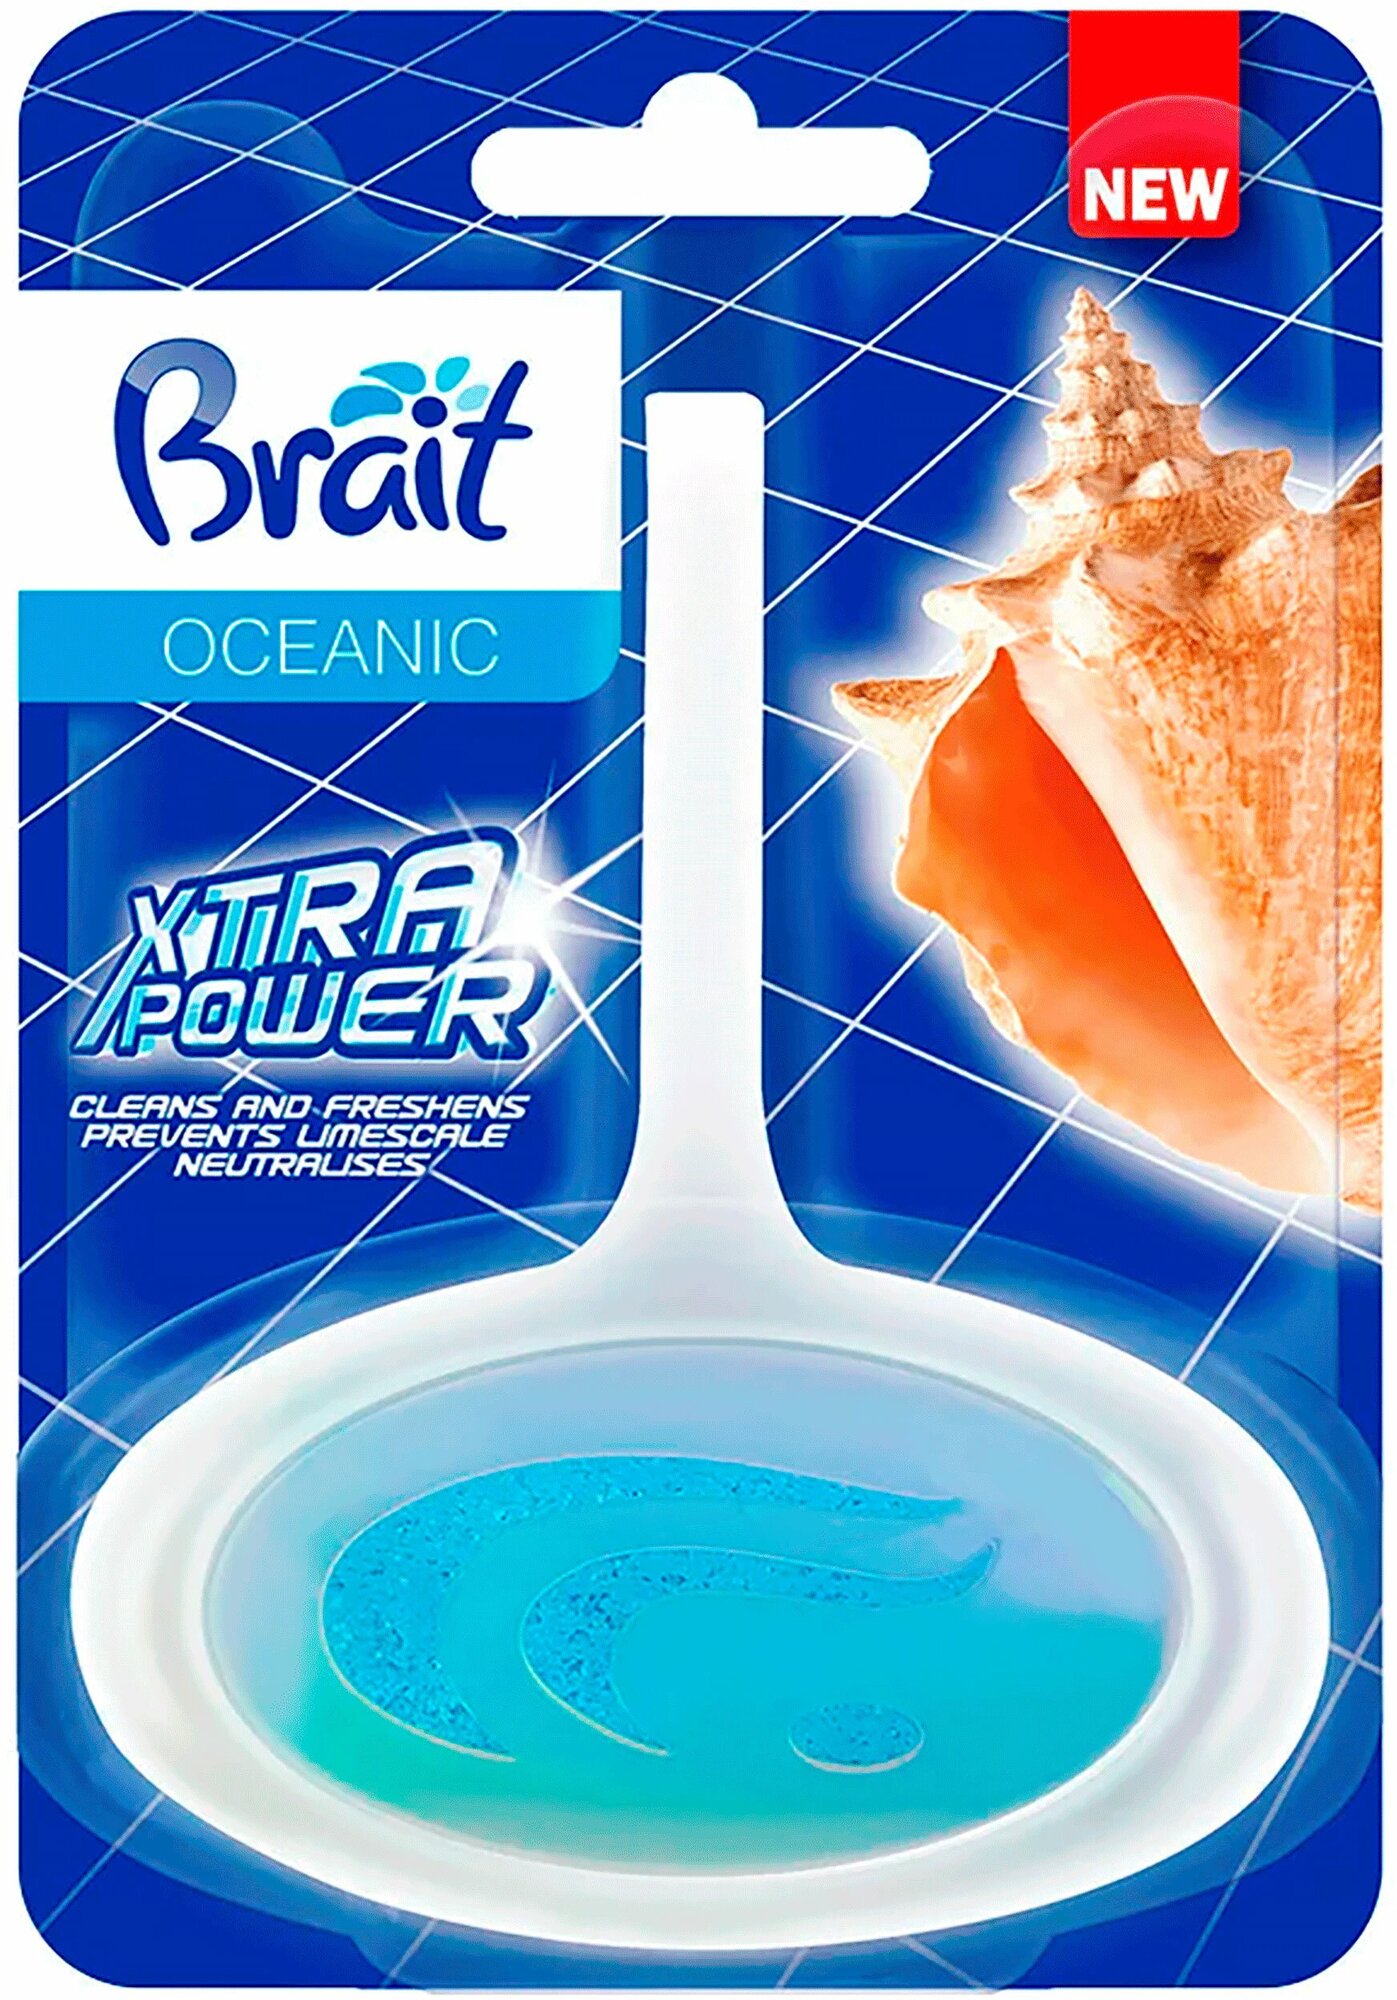 Brait Туалетный блок-корзинка OCEANIC Xtra Power с корзинкой устраненение грязи и запахов аромат Морской (40 гр)